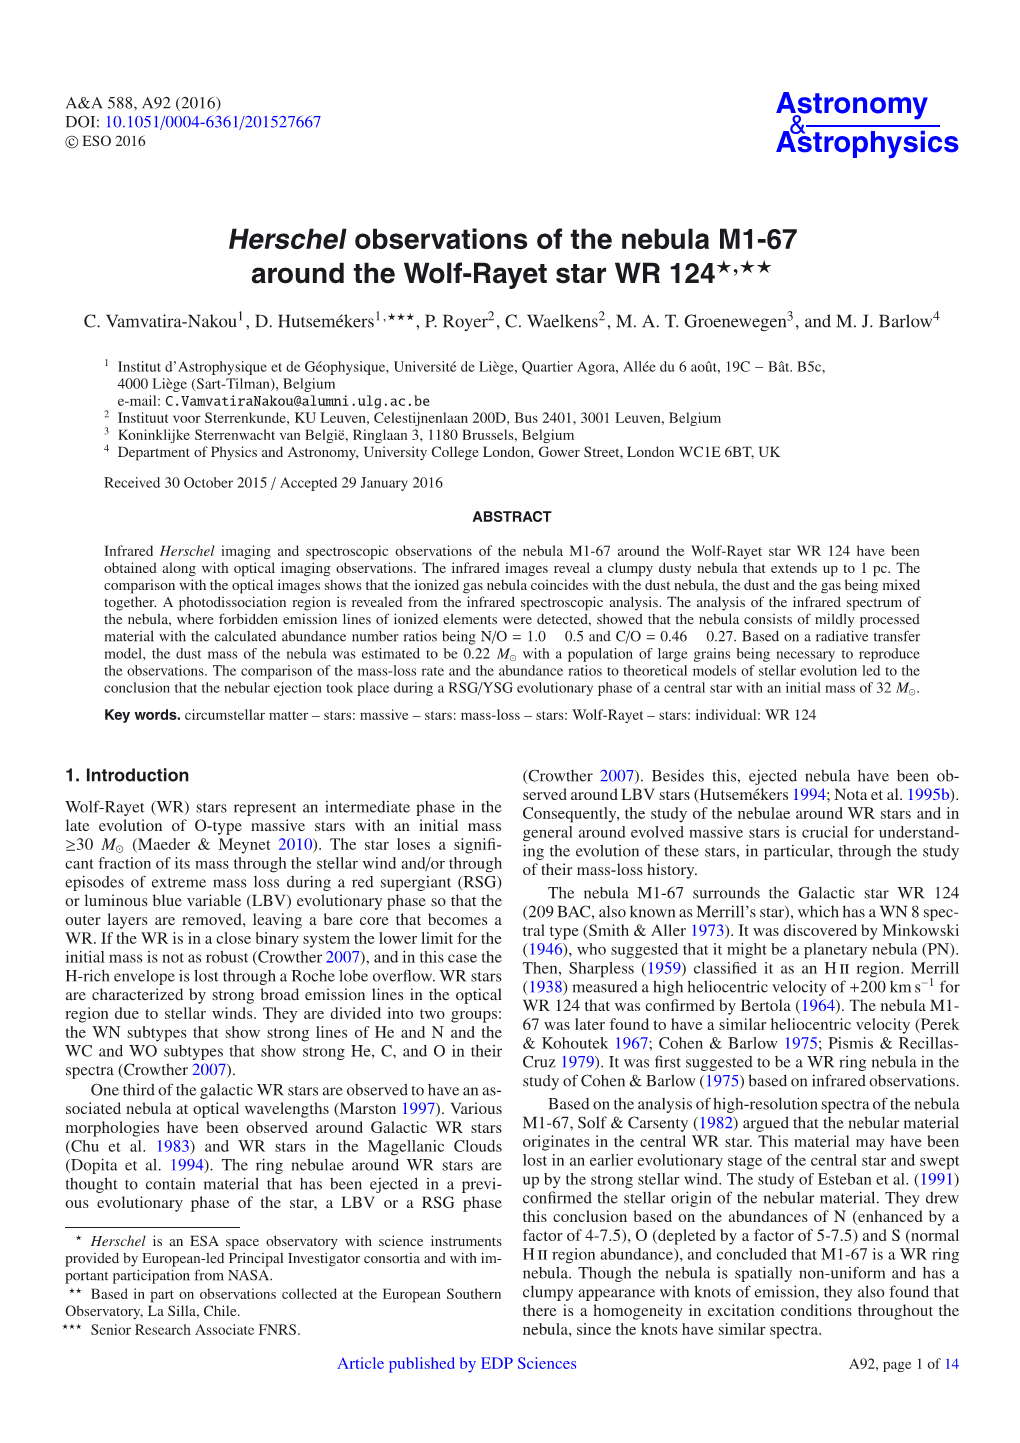 Herschel Observations of the Nebula M1-67 Around the Wolf-Rayet Star WR 124�,